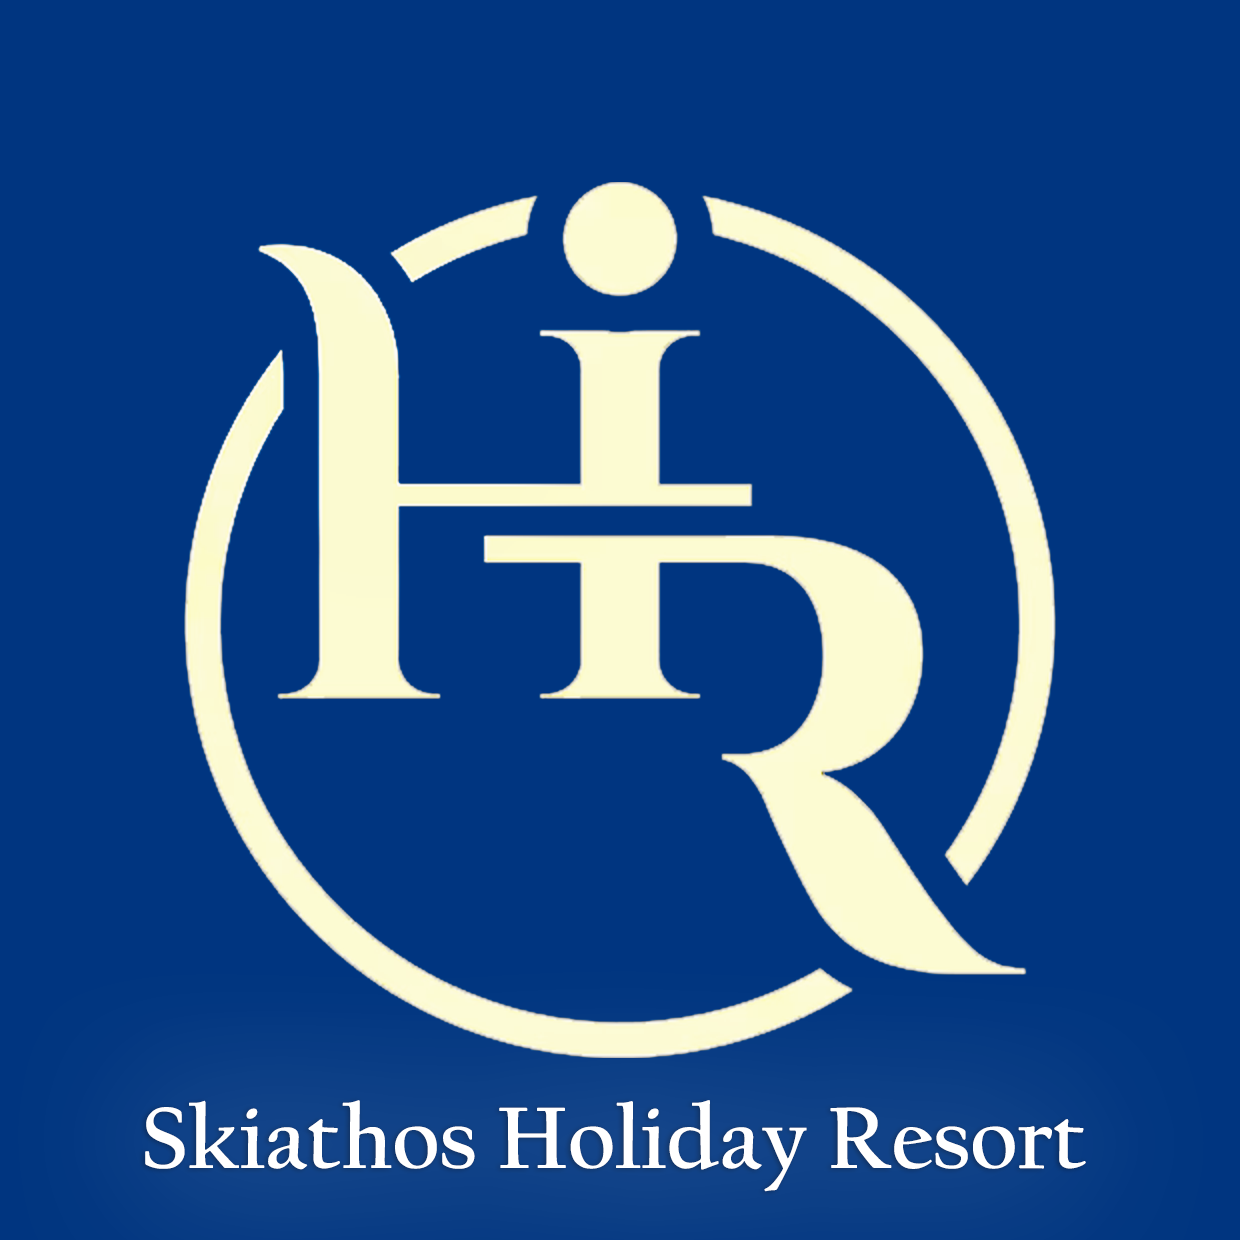 Skiathos Holiday Resort | Rooms - Skiathos Holiday Resort